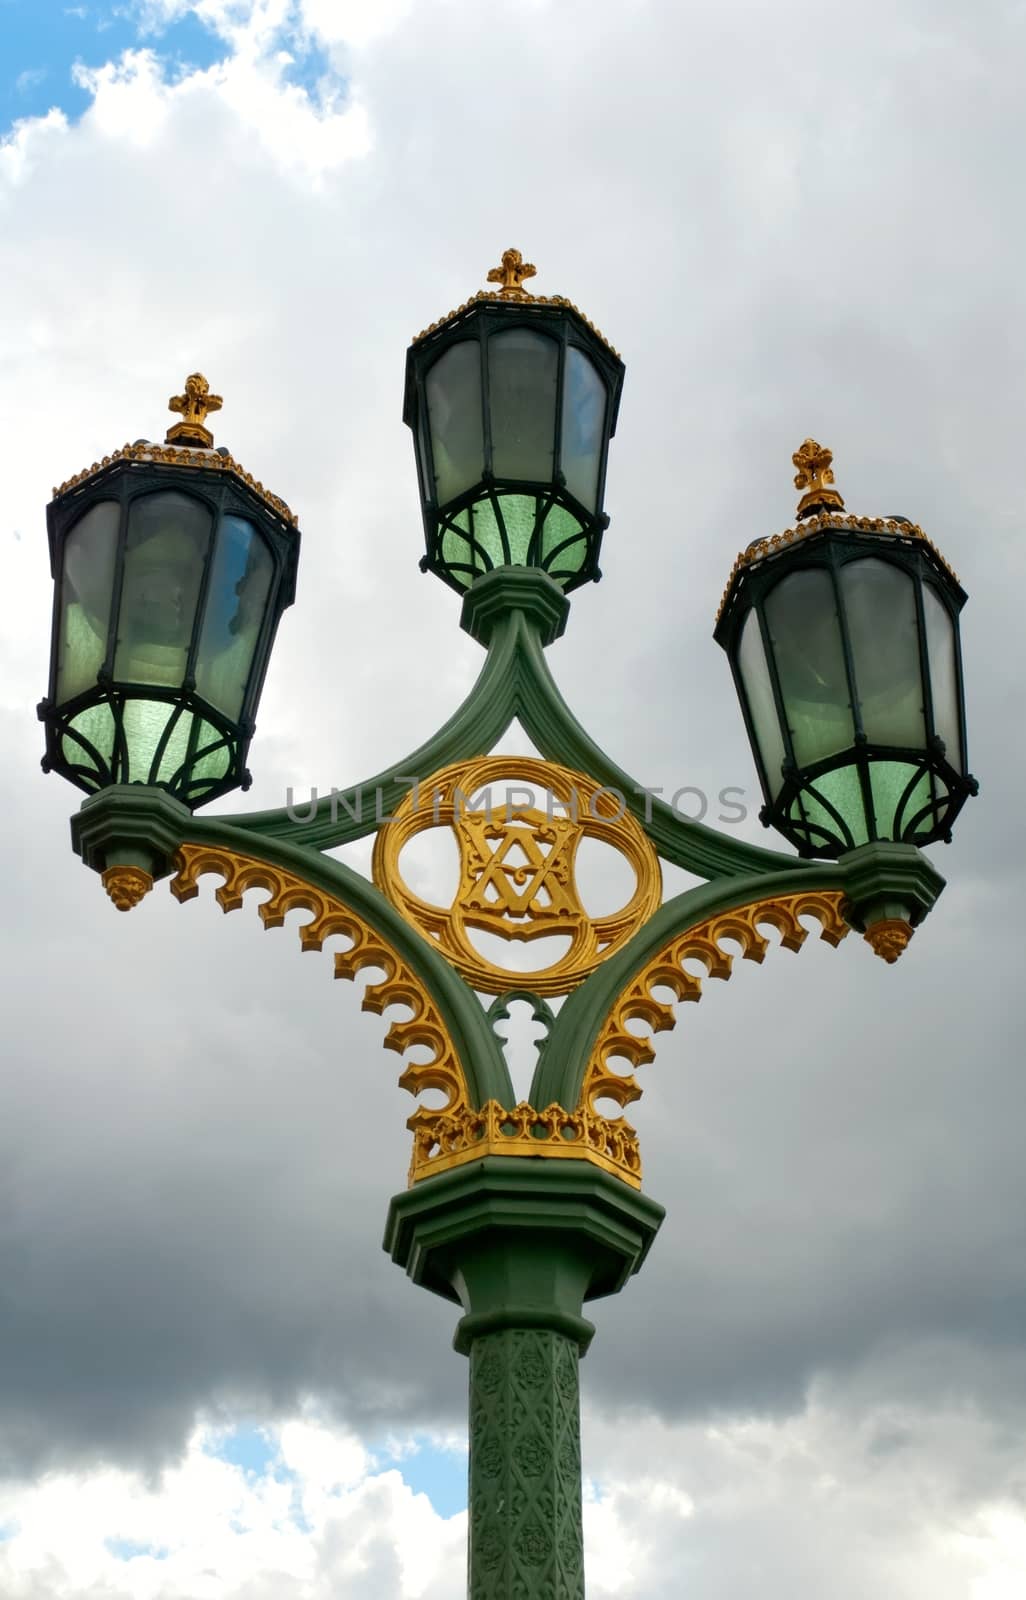 London lamp